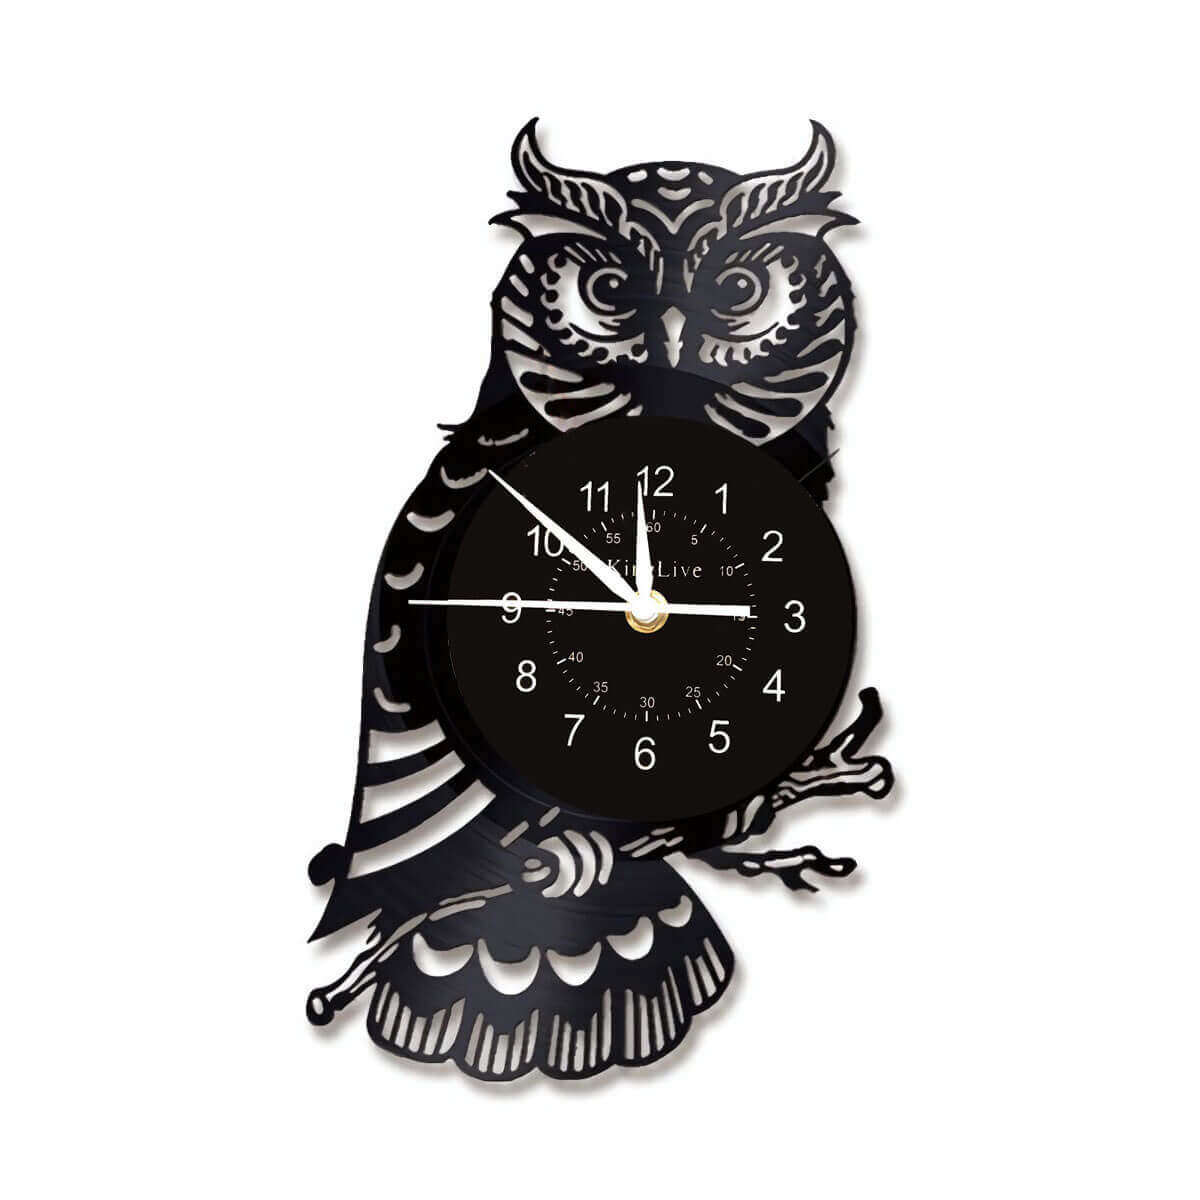 Owl Vinyl Record Wall Clock Black